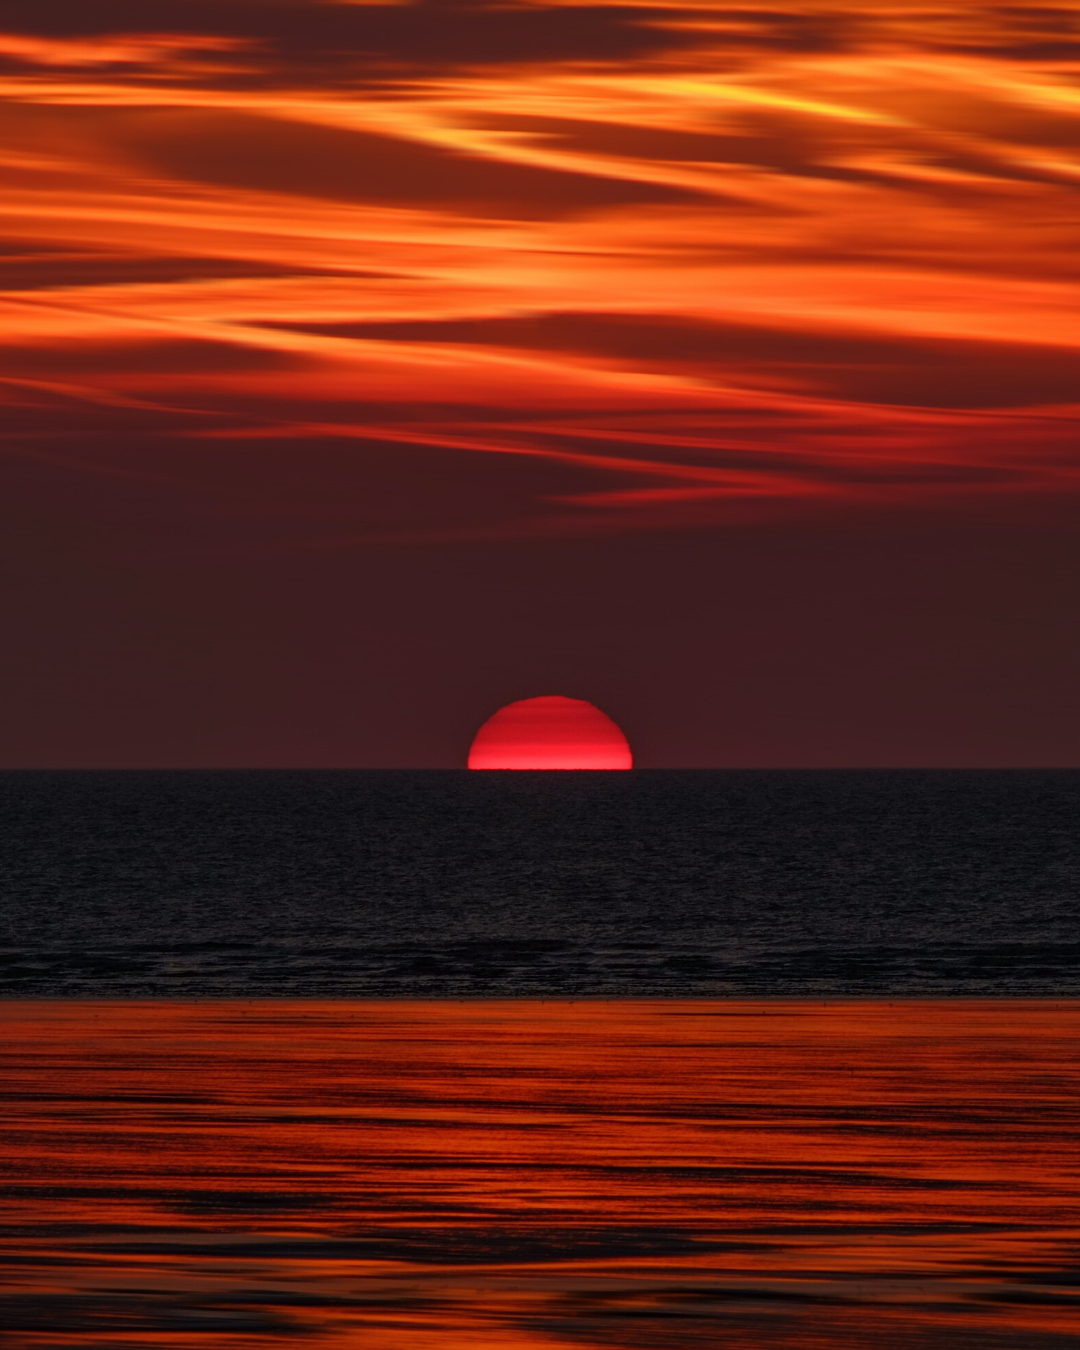 Sunrise on the horizon line above the sea with orange skies